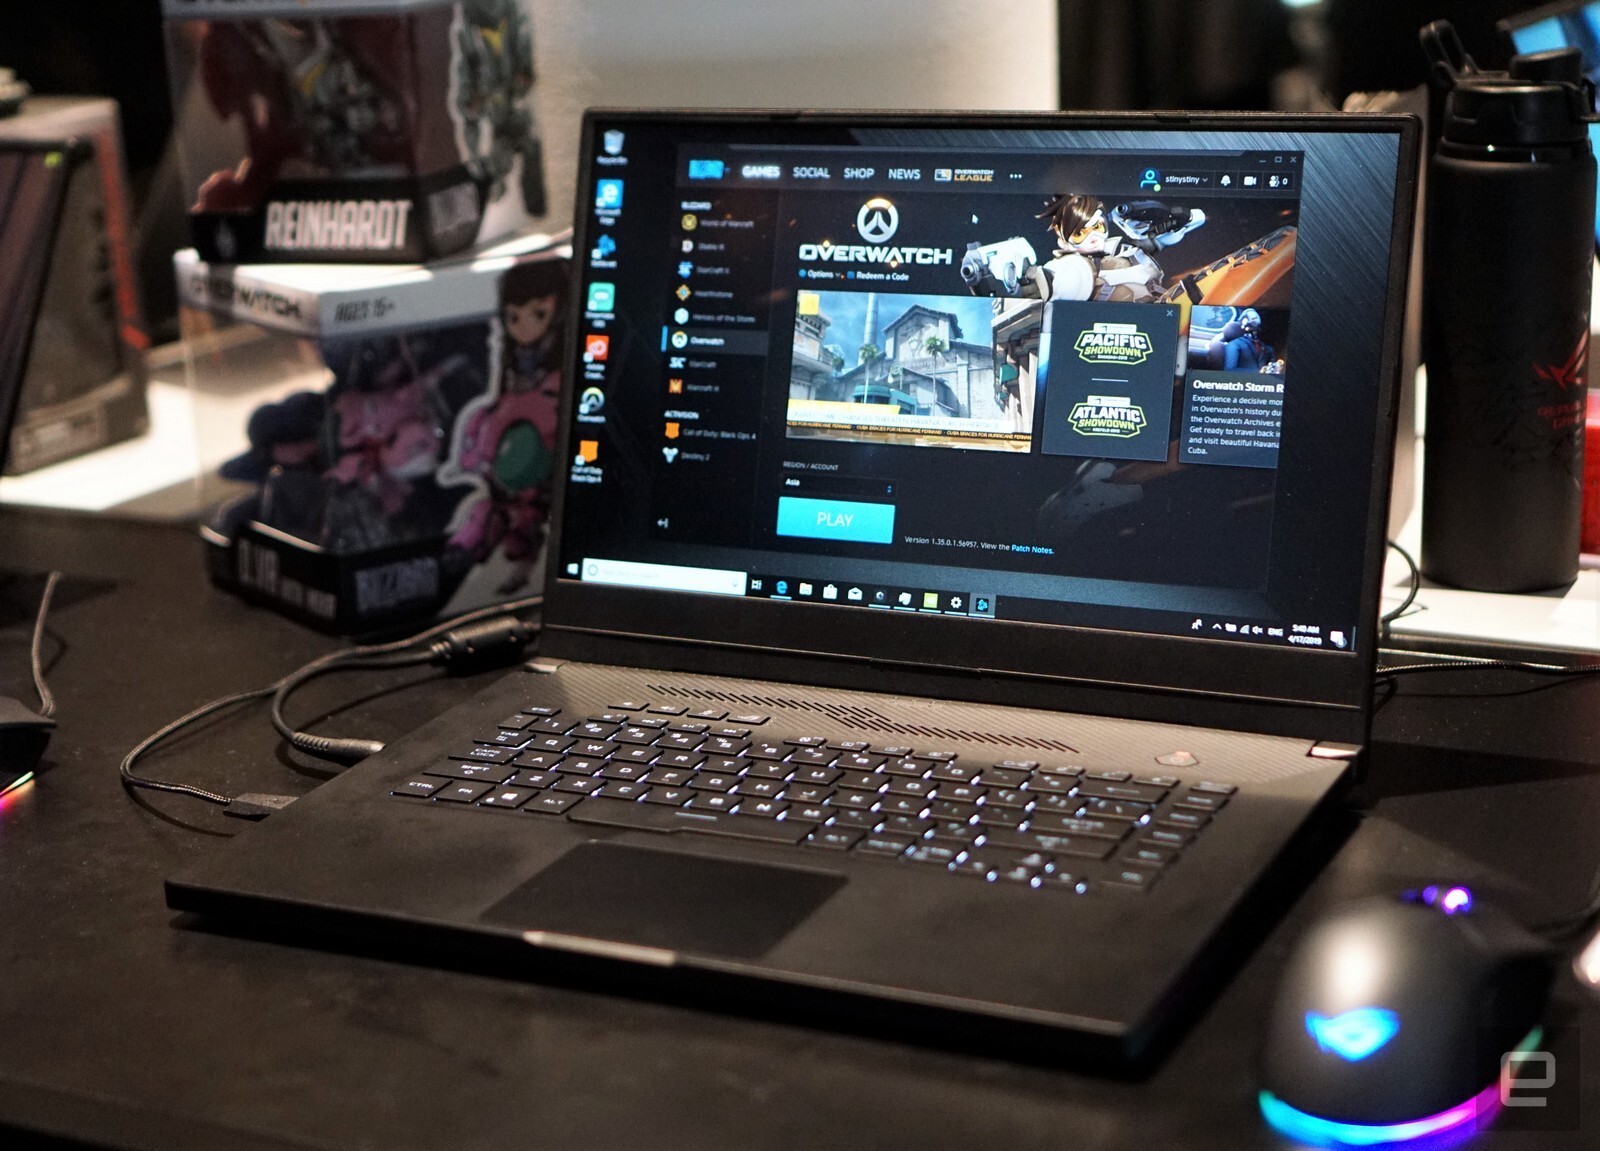 Asus rinnova i laptop da gaming Zephyrus e annuncia i nuovi Strix III sviluppato insieme a BMW 3